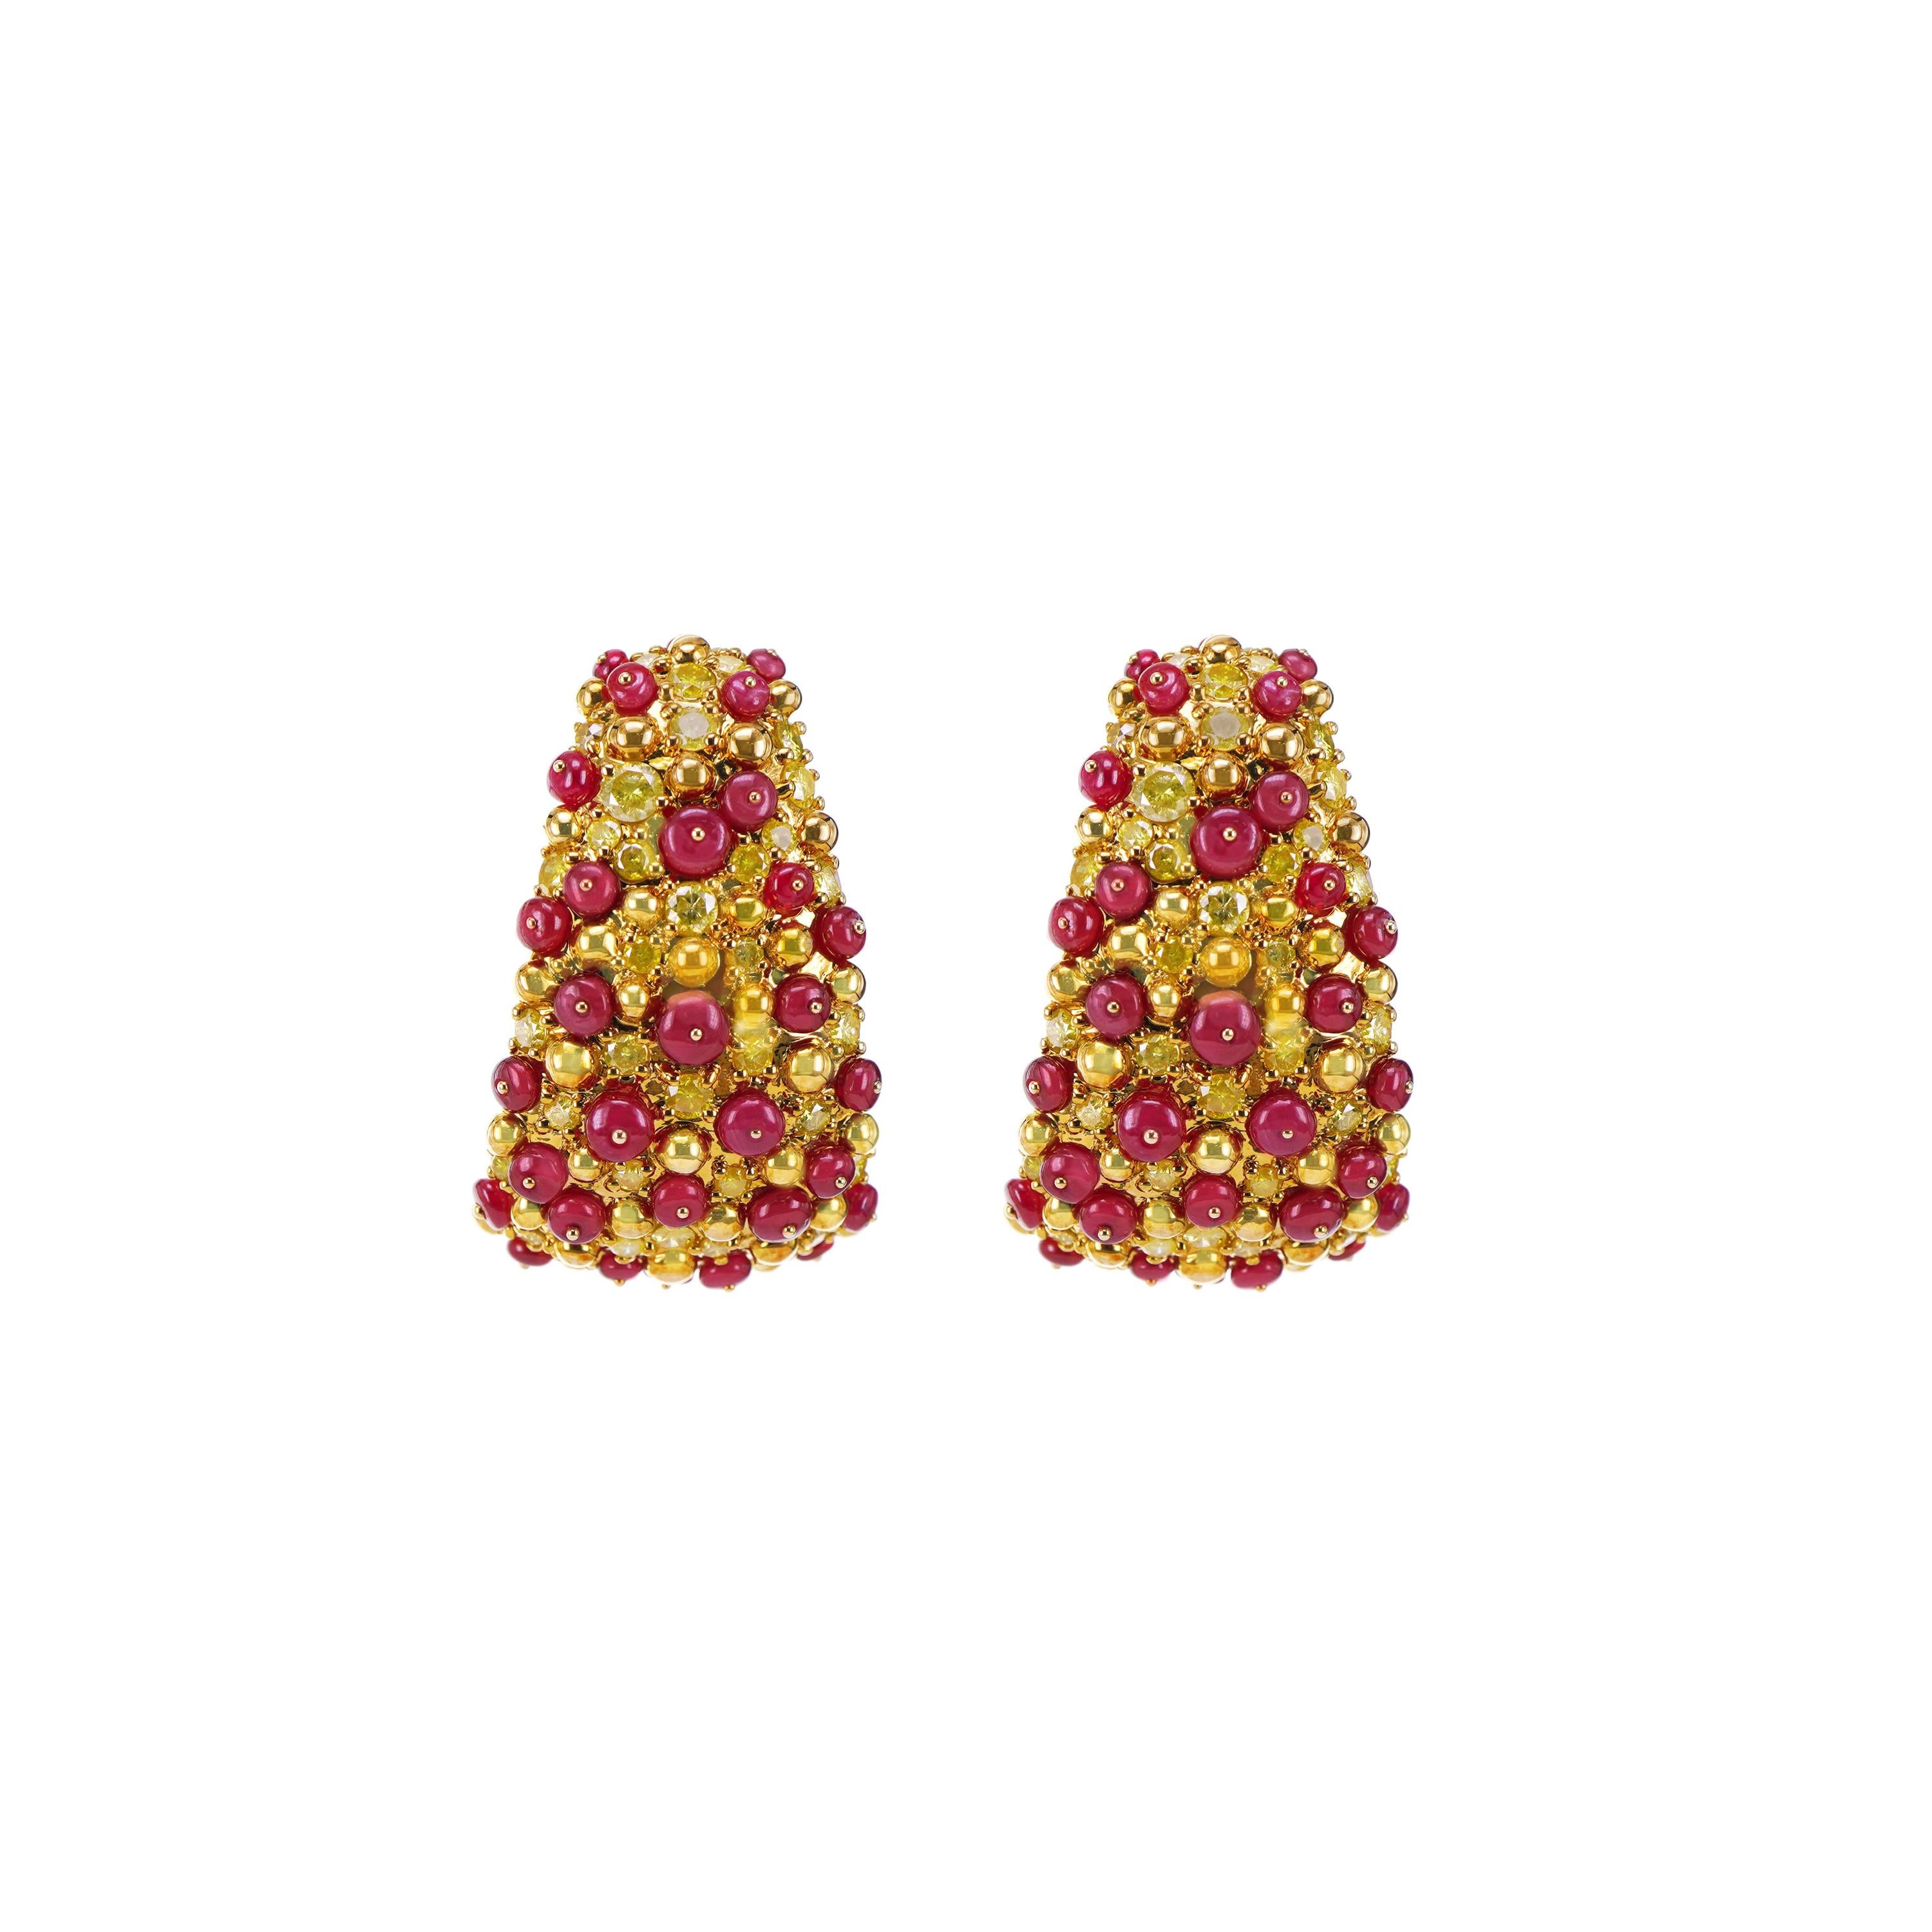 12.98 Carat Vivid Red Ruby 3.78 Carat Vivid Yellow Diamond Dangle Earring For Sale